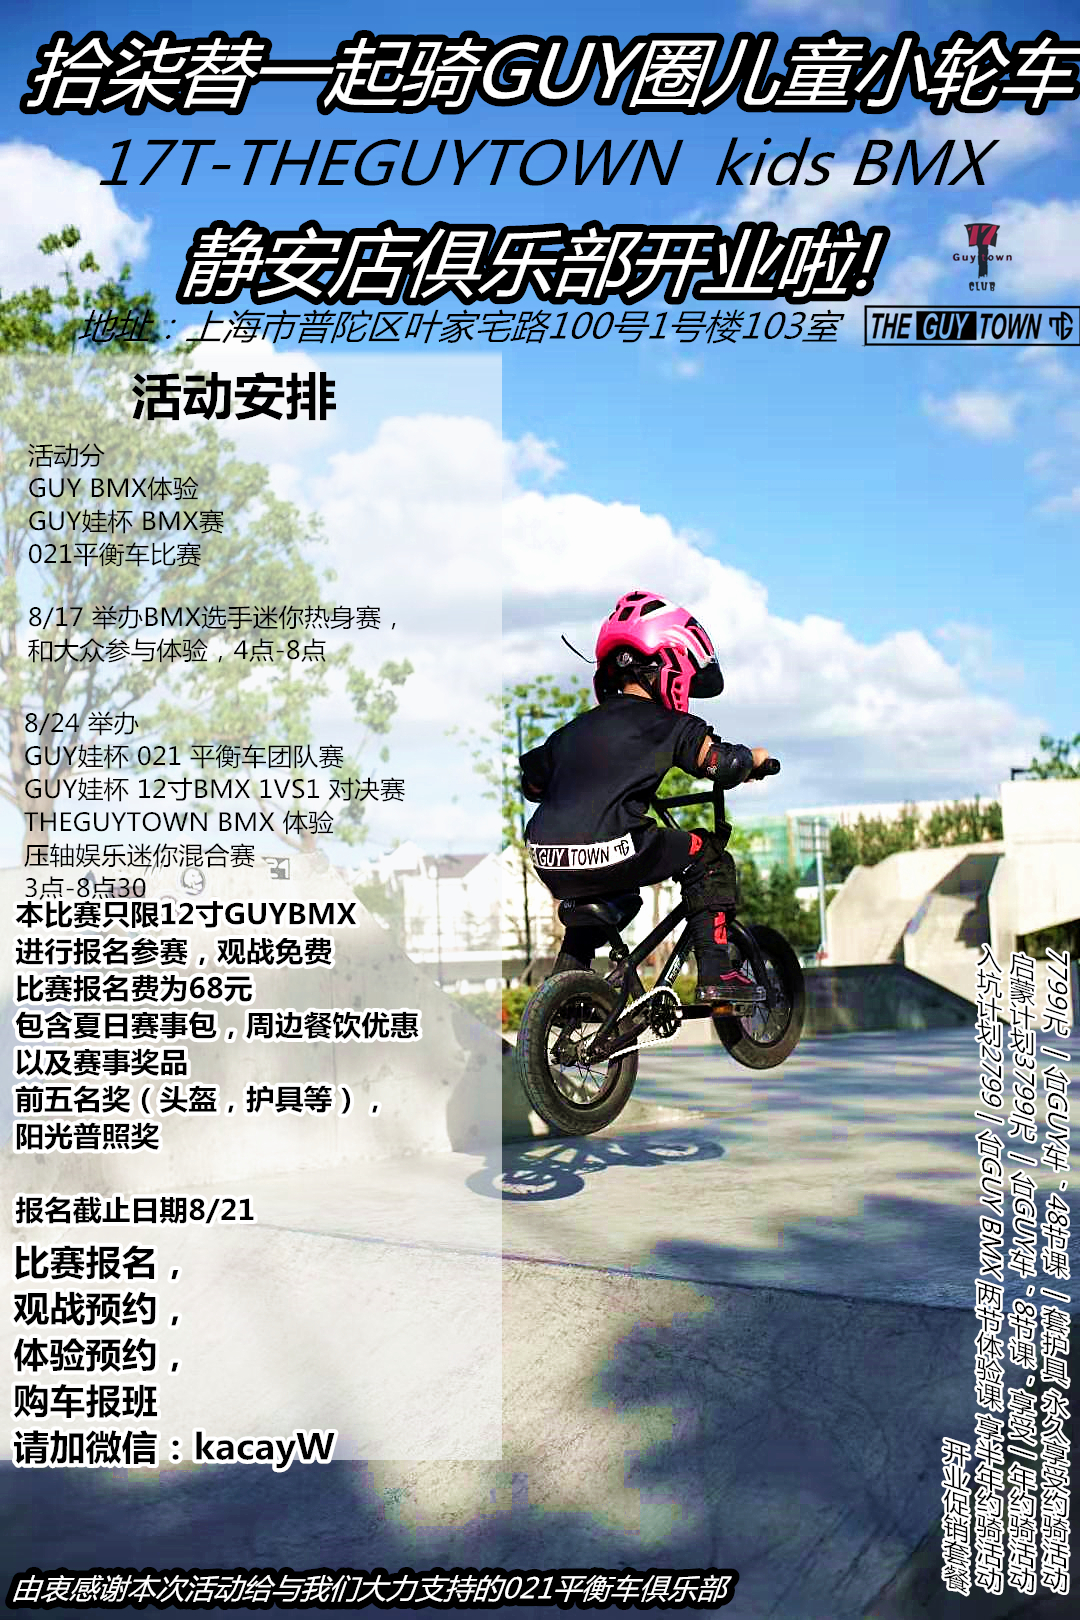 theguytown儿童bmx小轮车上海静安俱乐部开业活动8月24日平衡车滑步车